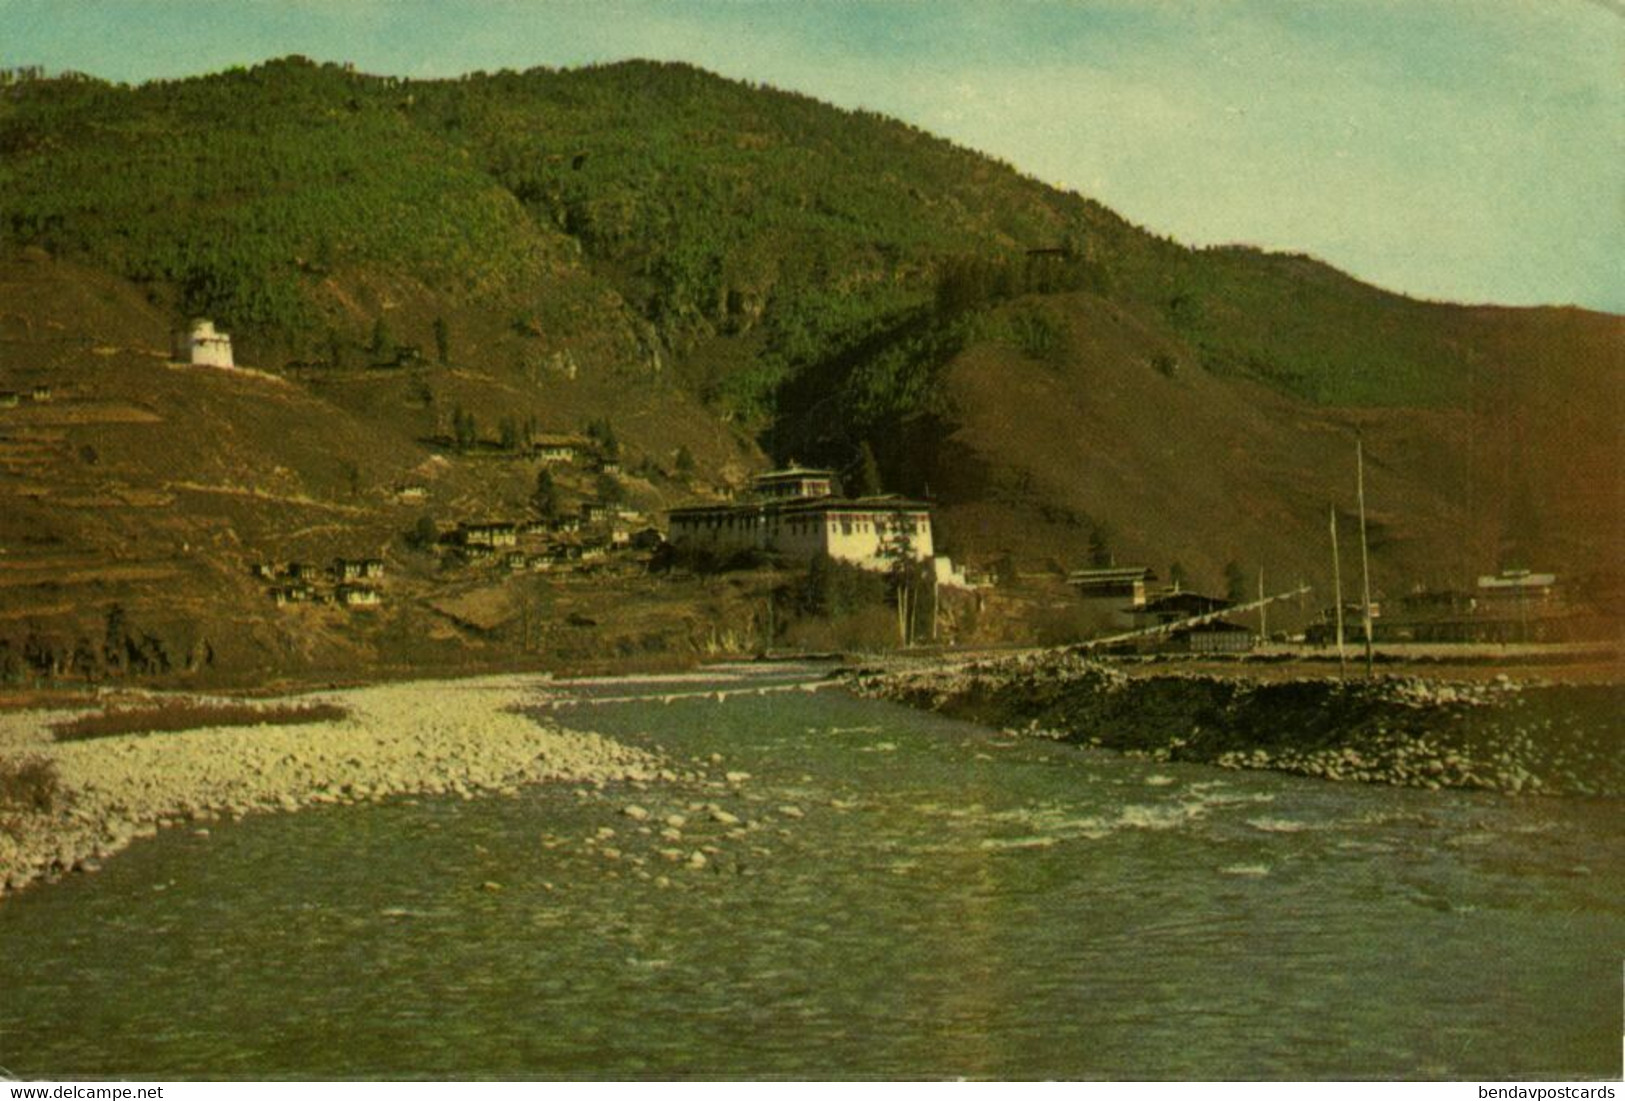 Bhutan, PARO སྤ་རོ་, Rinpung Dzong Buddhist Monastery (1960s) Postcard - Bhutan